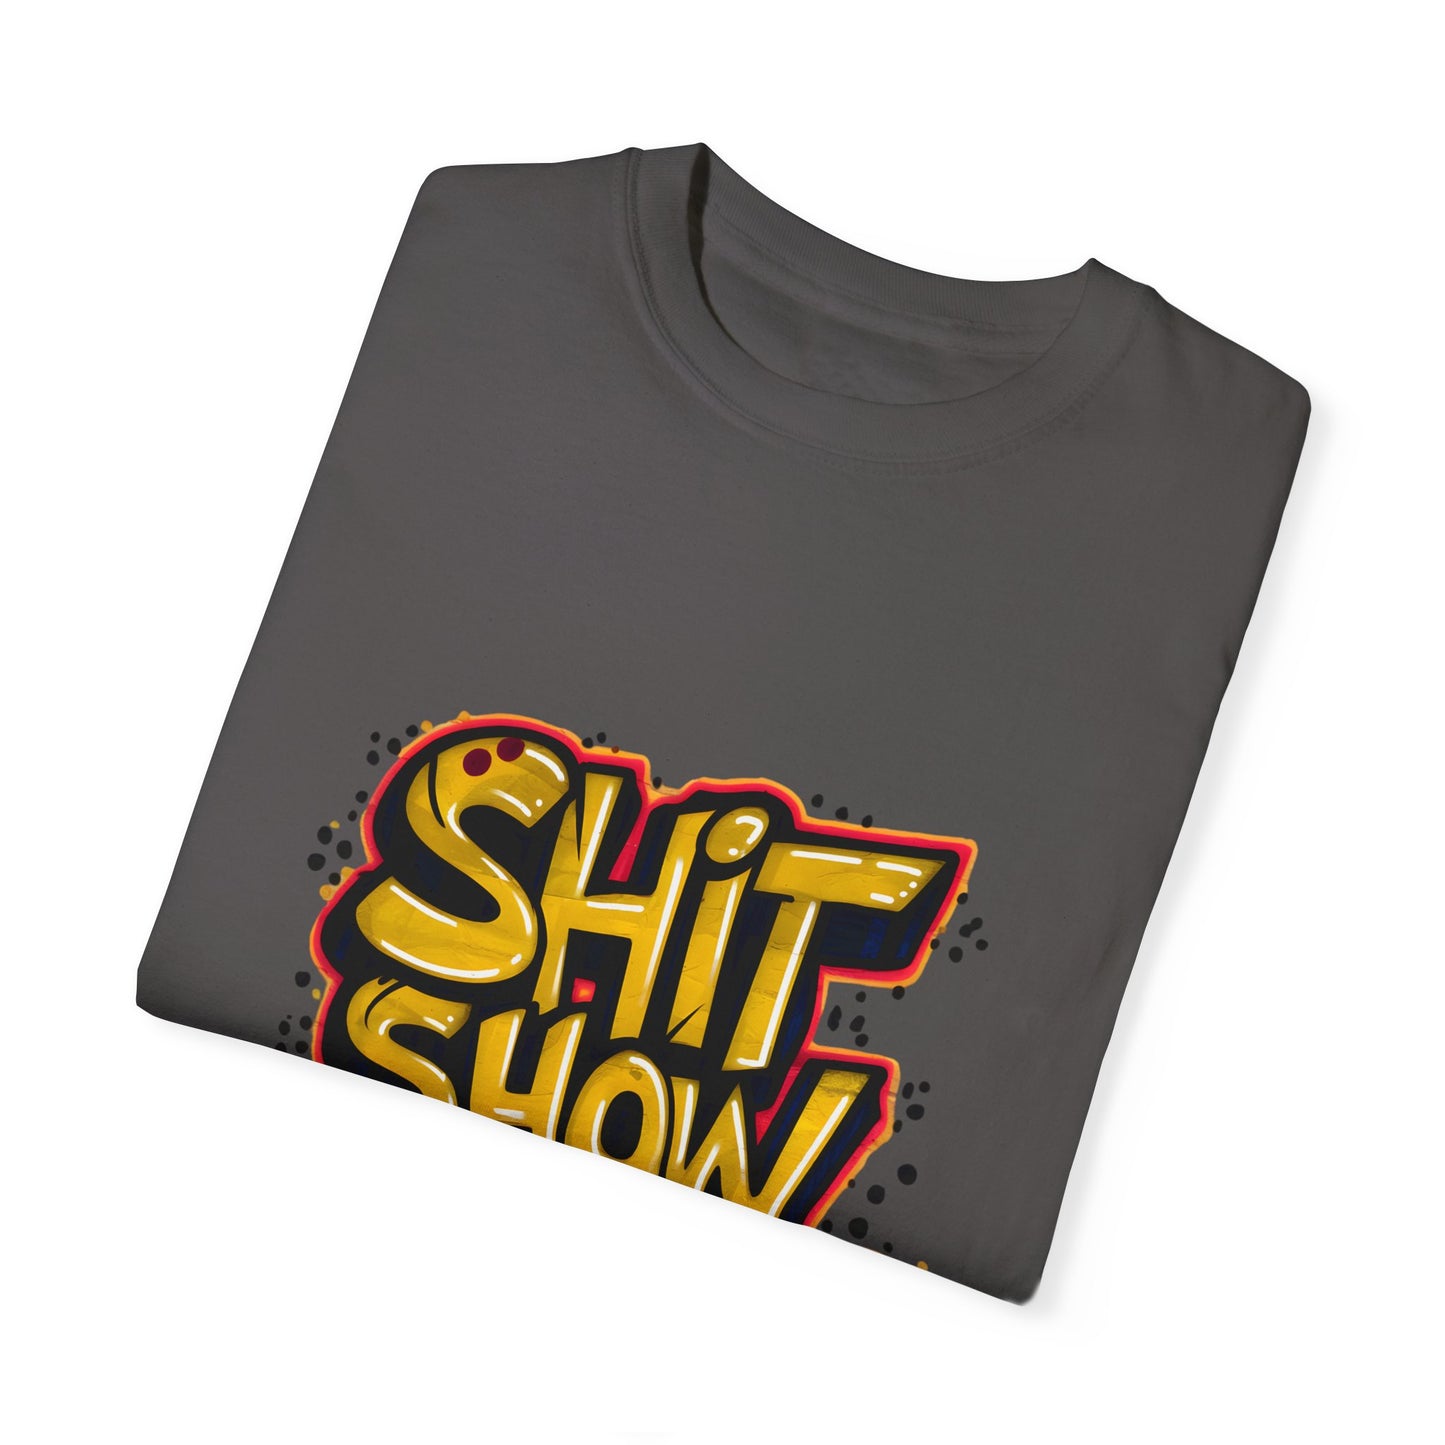 Shit Show Supervisor Urban Sarcastic Graphic Unisex Garment Dyed T-shirt Cotton Funny Humorous Graphic Soft Premium Unisex Men Women Graphite T-shirt Birthday Gift-38